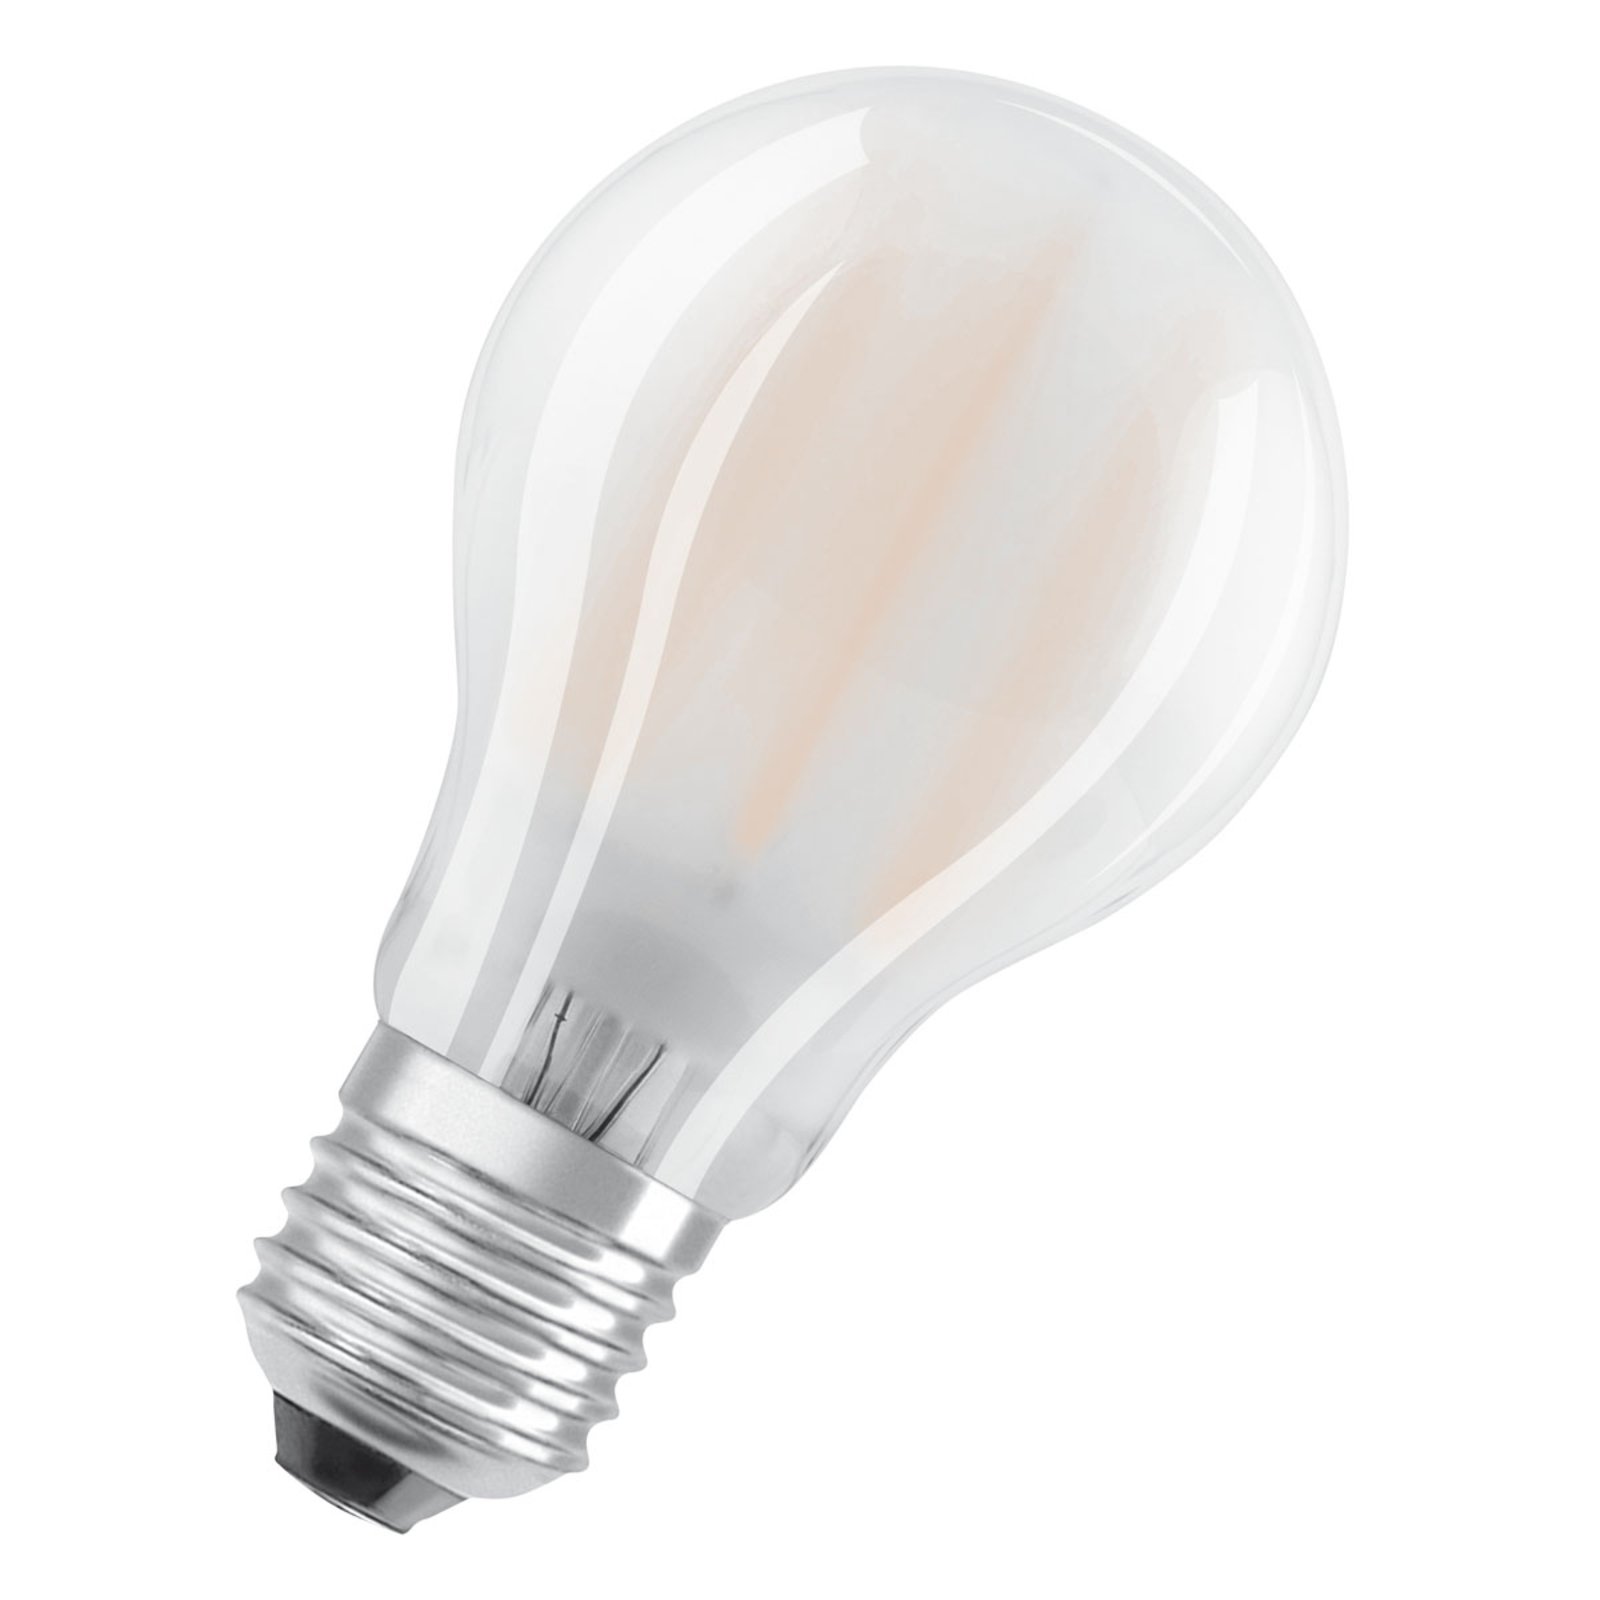 OSRAM LED-Lampe E27 4W warmweiß im 2er-Set